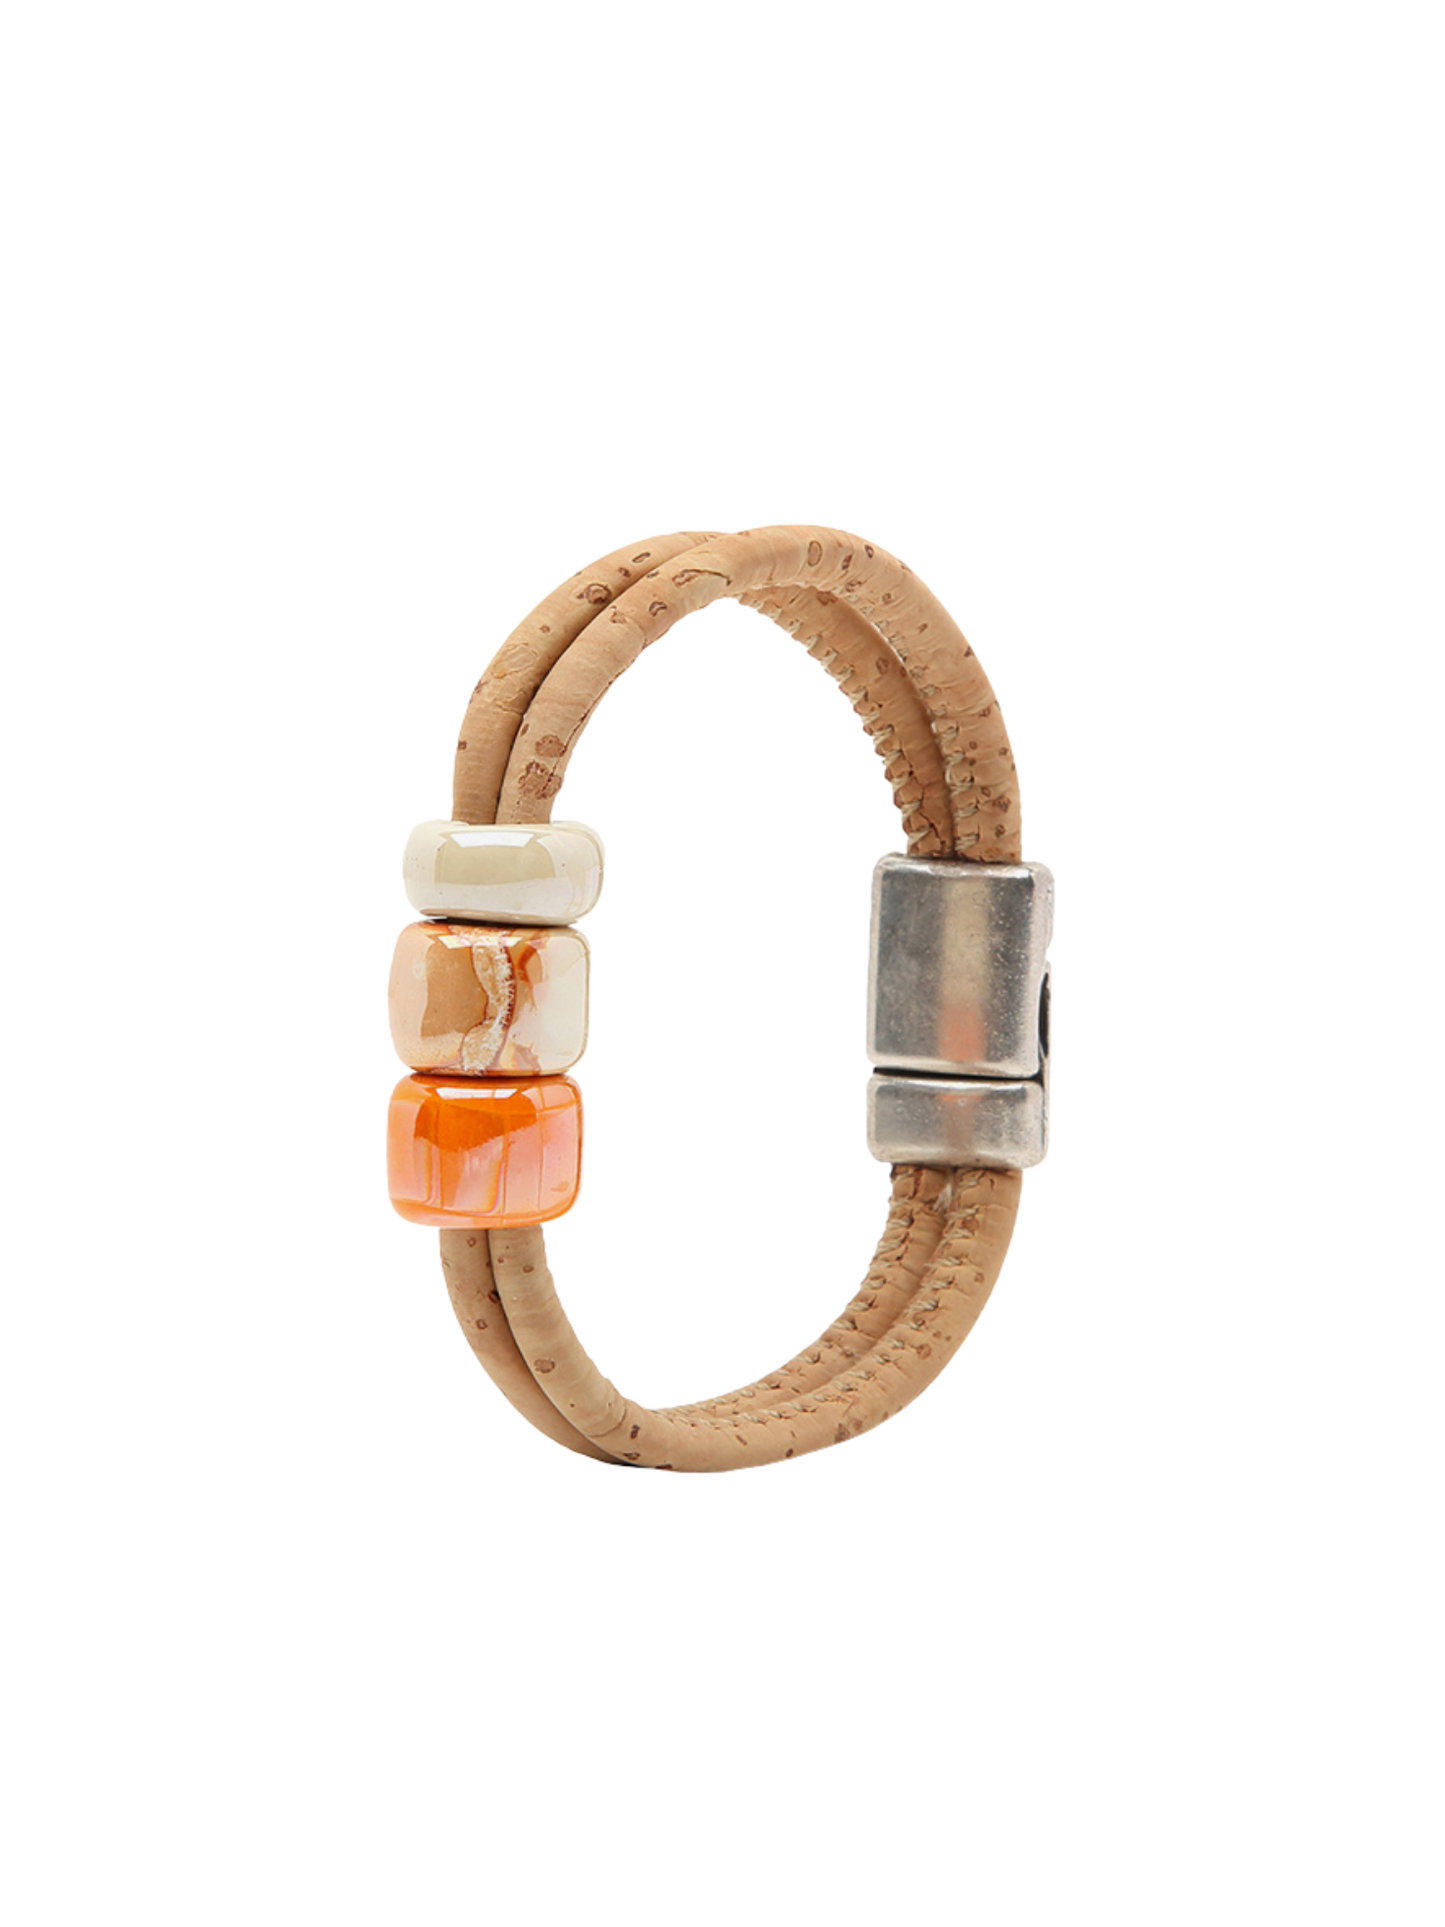 Artelusa Cork Bracelet with Multicolour Ceramic Beads - Beige-Orange - 2_1372d880-c7fb-4592-b985-5bce96dcd7b2